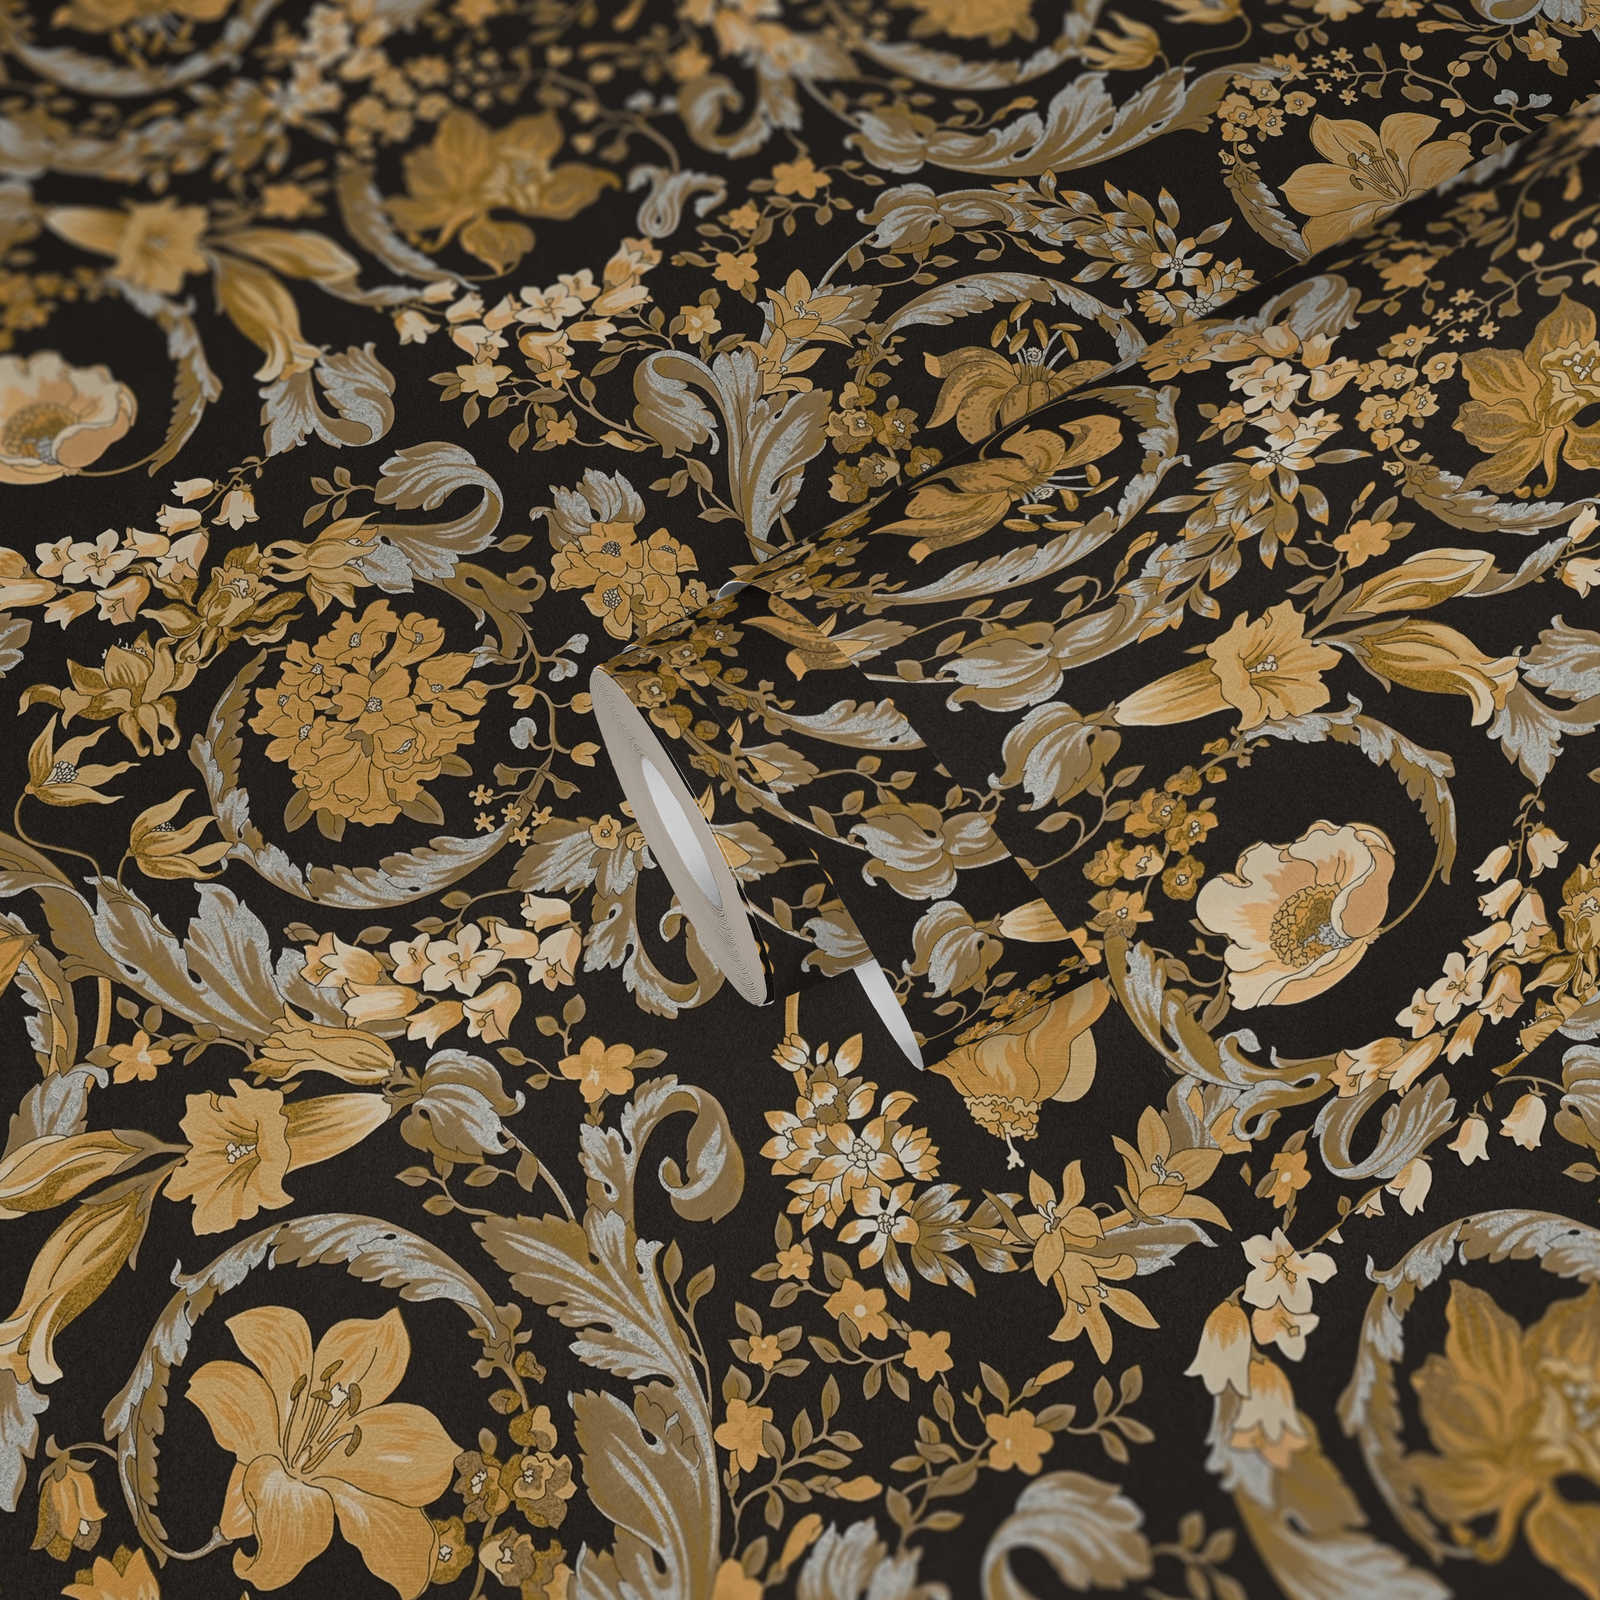             Schwarze VERSACE Tapete mit floralem Gold-Ornament
        